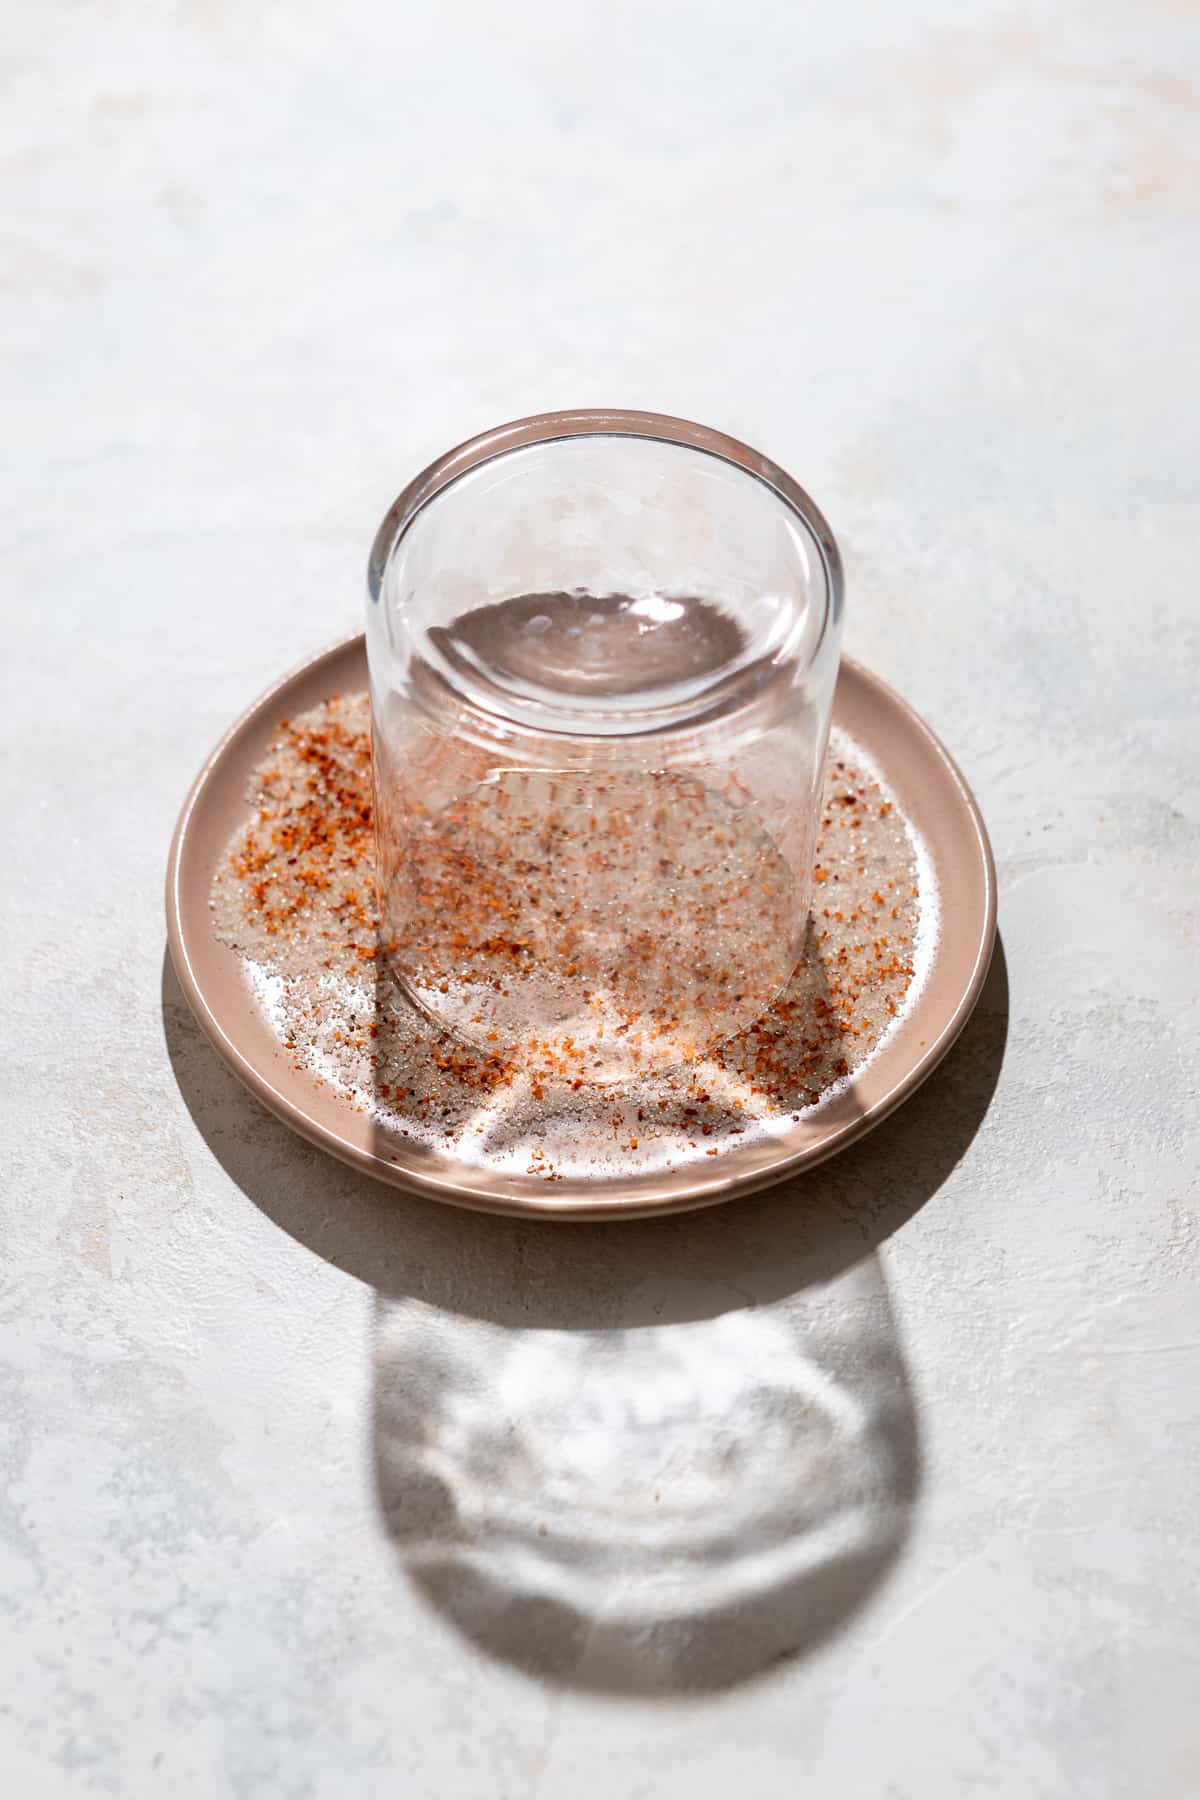 A glass upside down on a plate with sugar and Tajin seasoning.